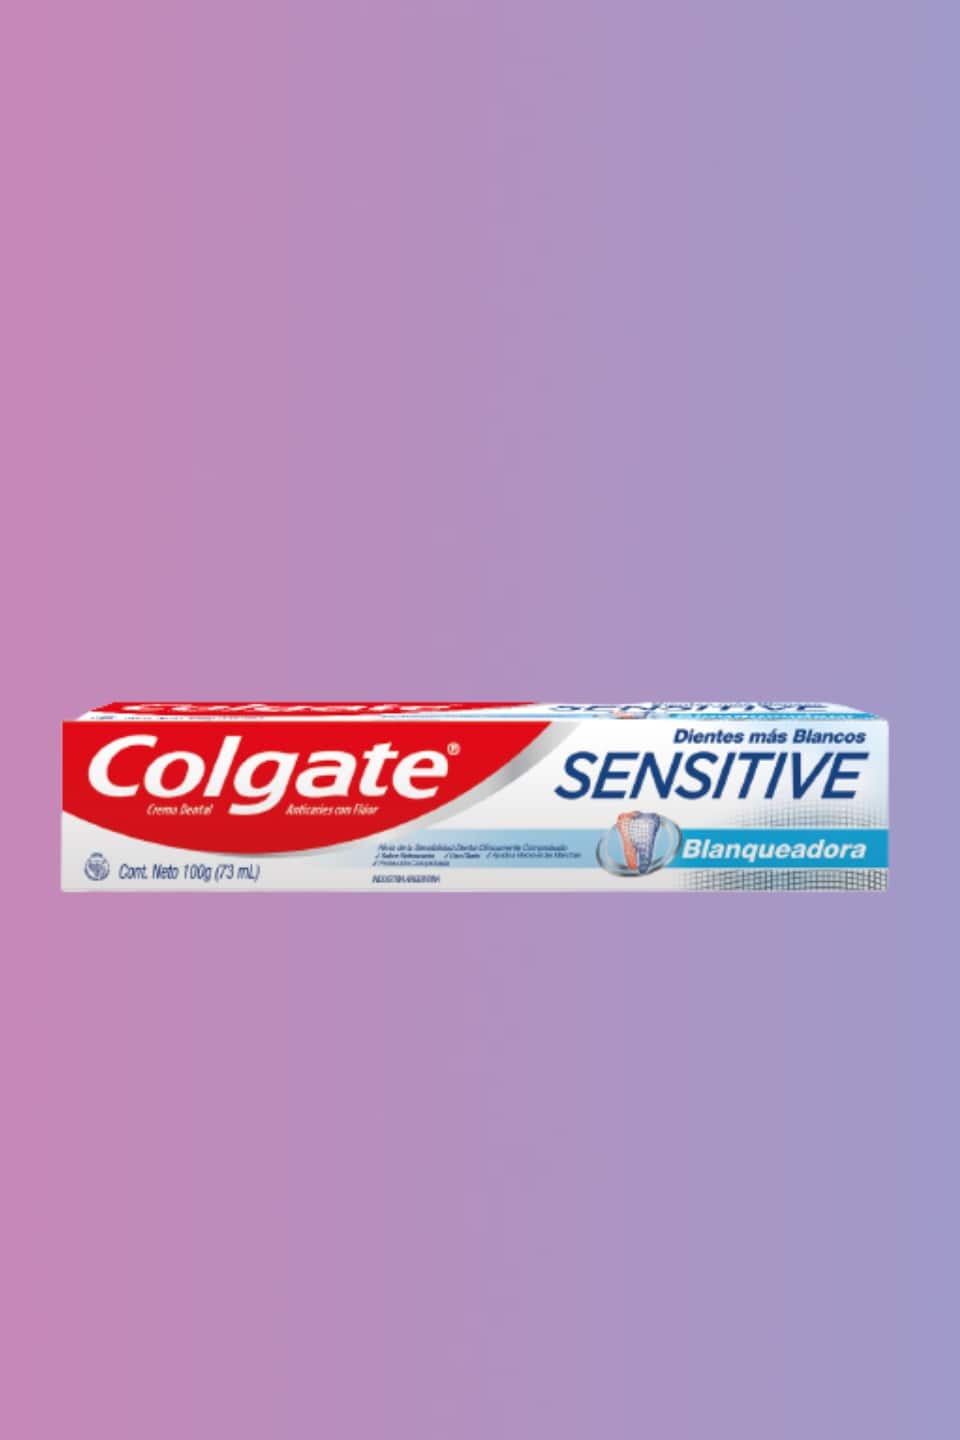 Colgate Sensitive